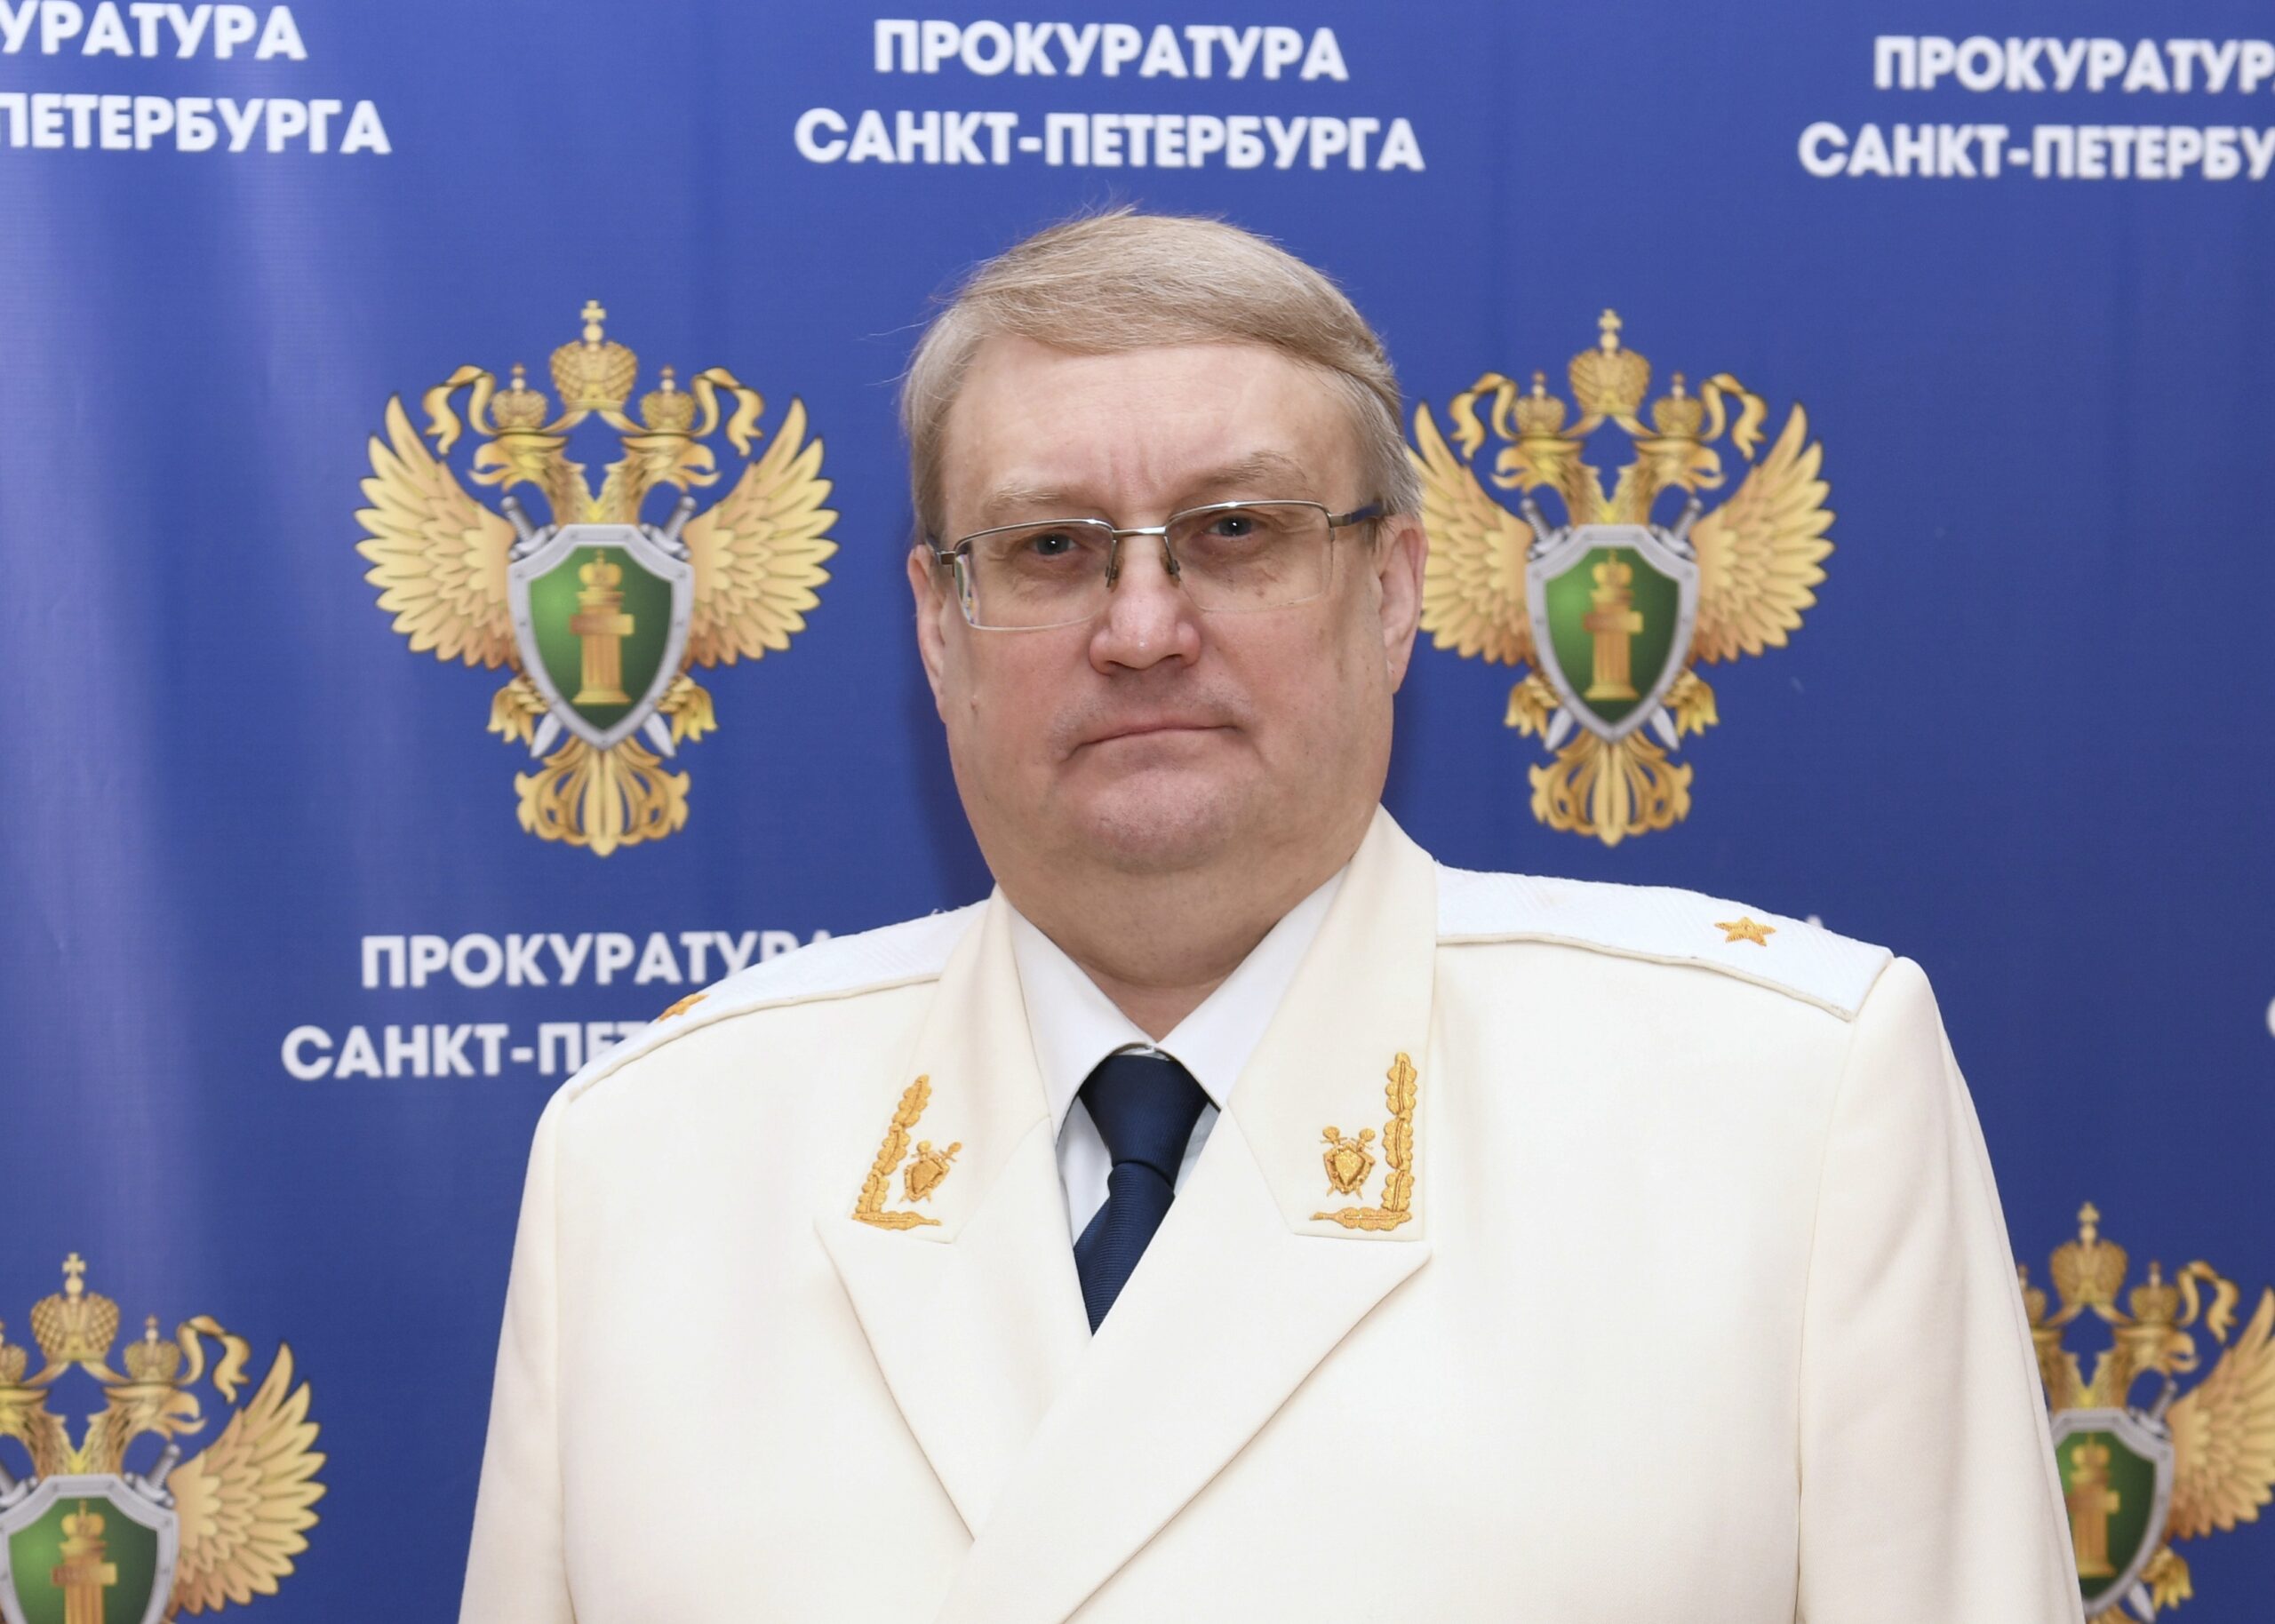 артюхов алексей военный прокурор фото